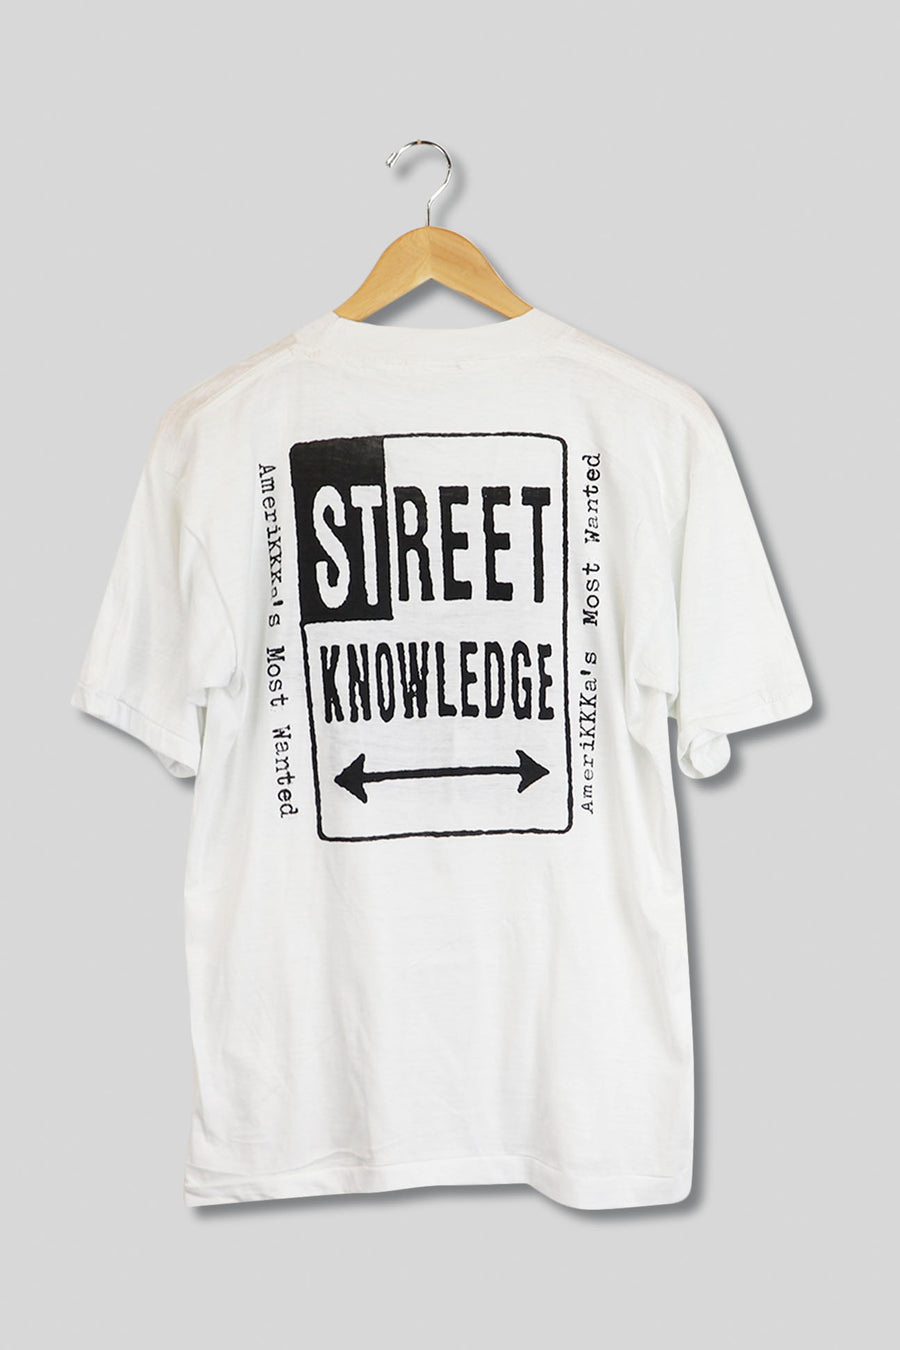 Vintage Lenchmob Rap T Shirt Sz L